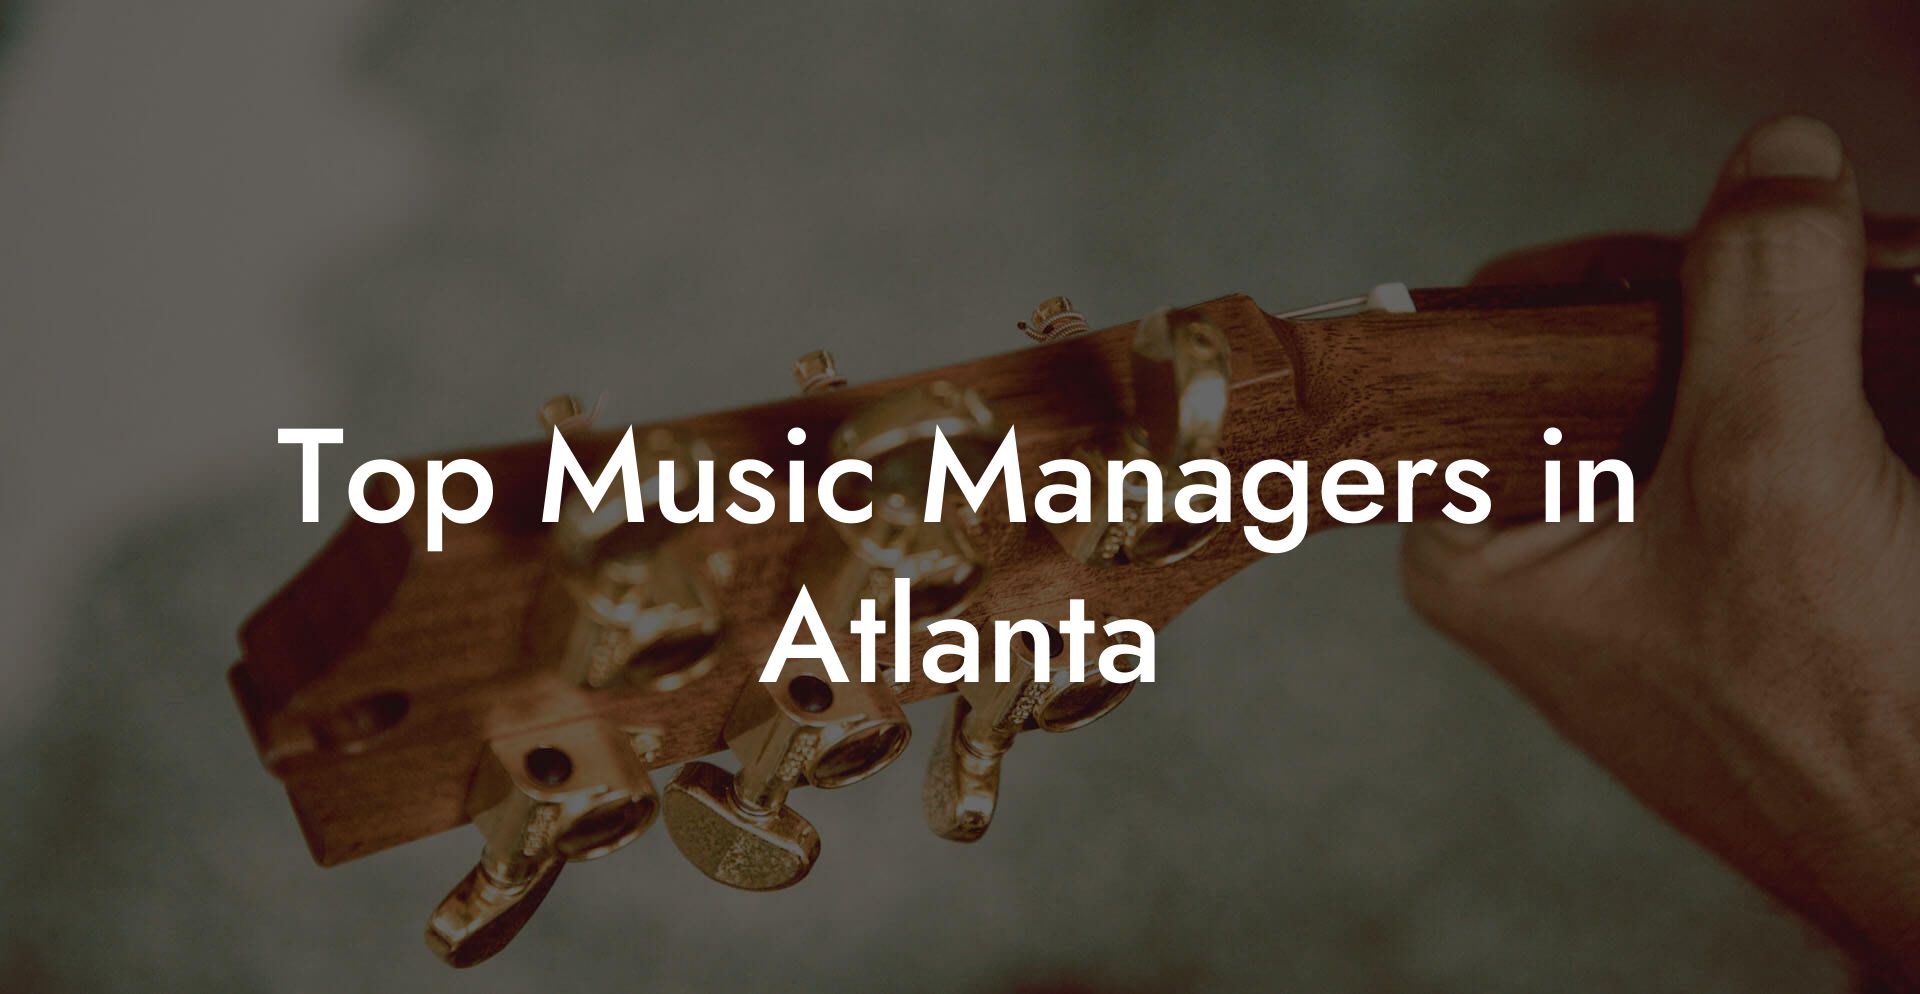 Top Music Managers in Atlanta